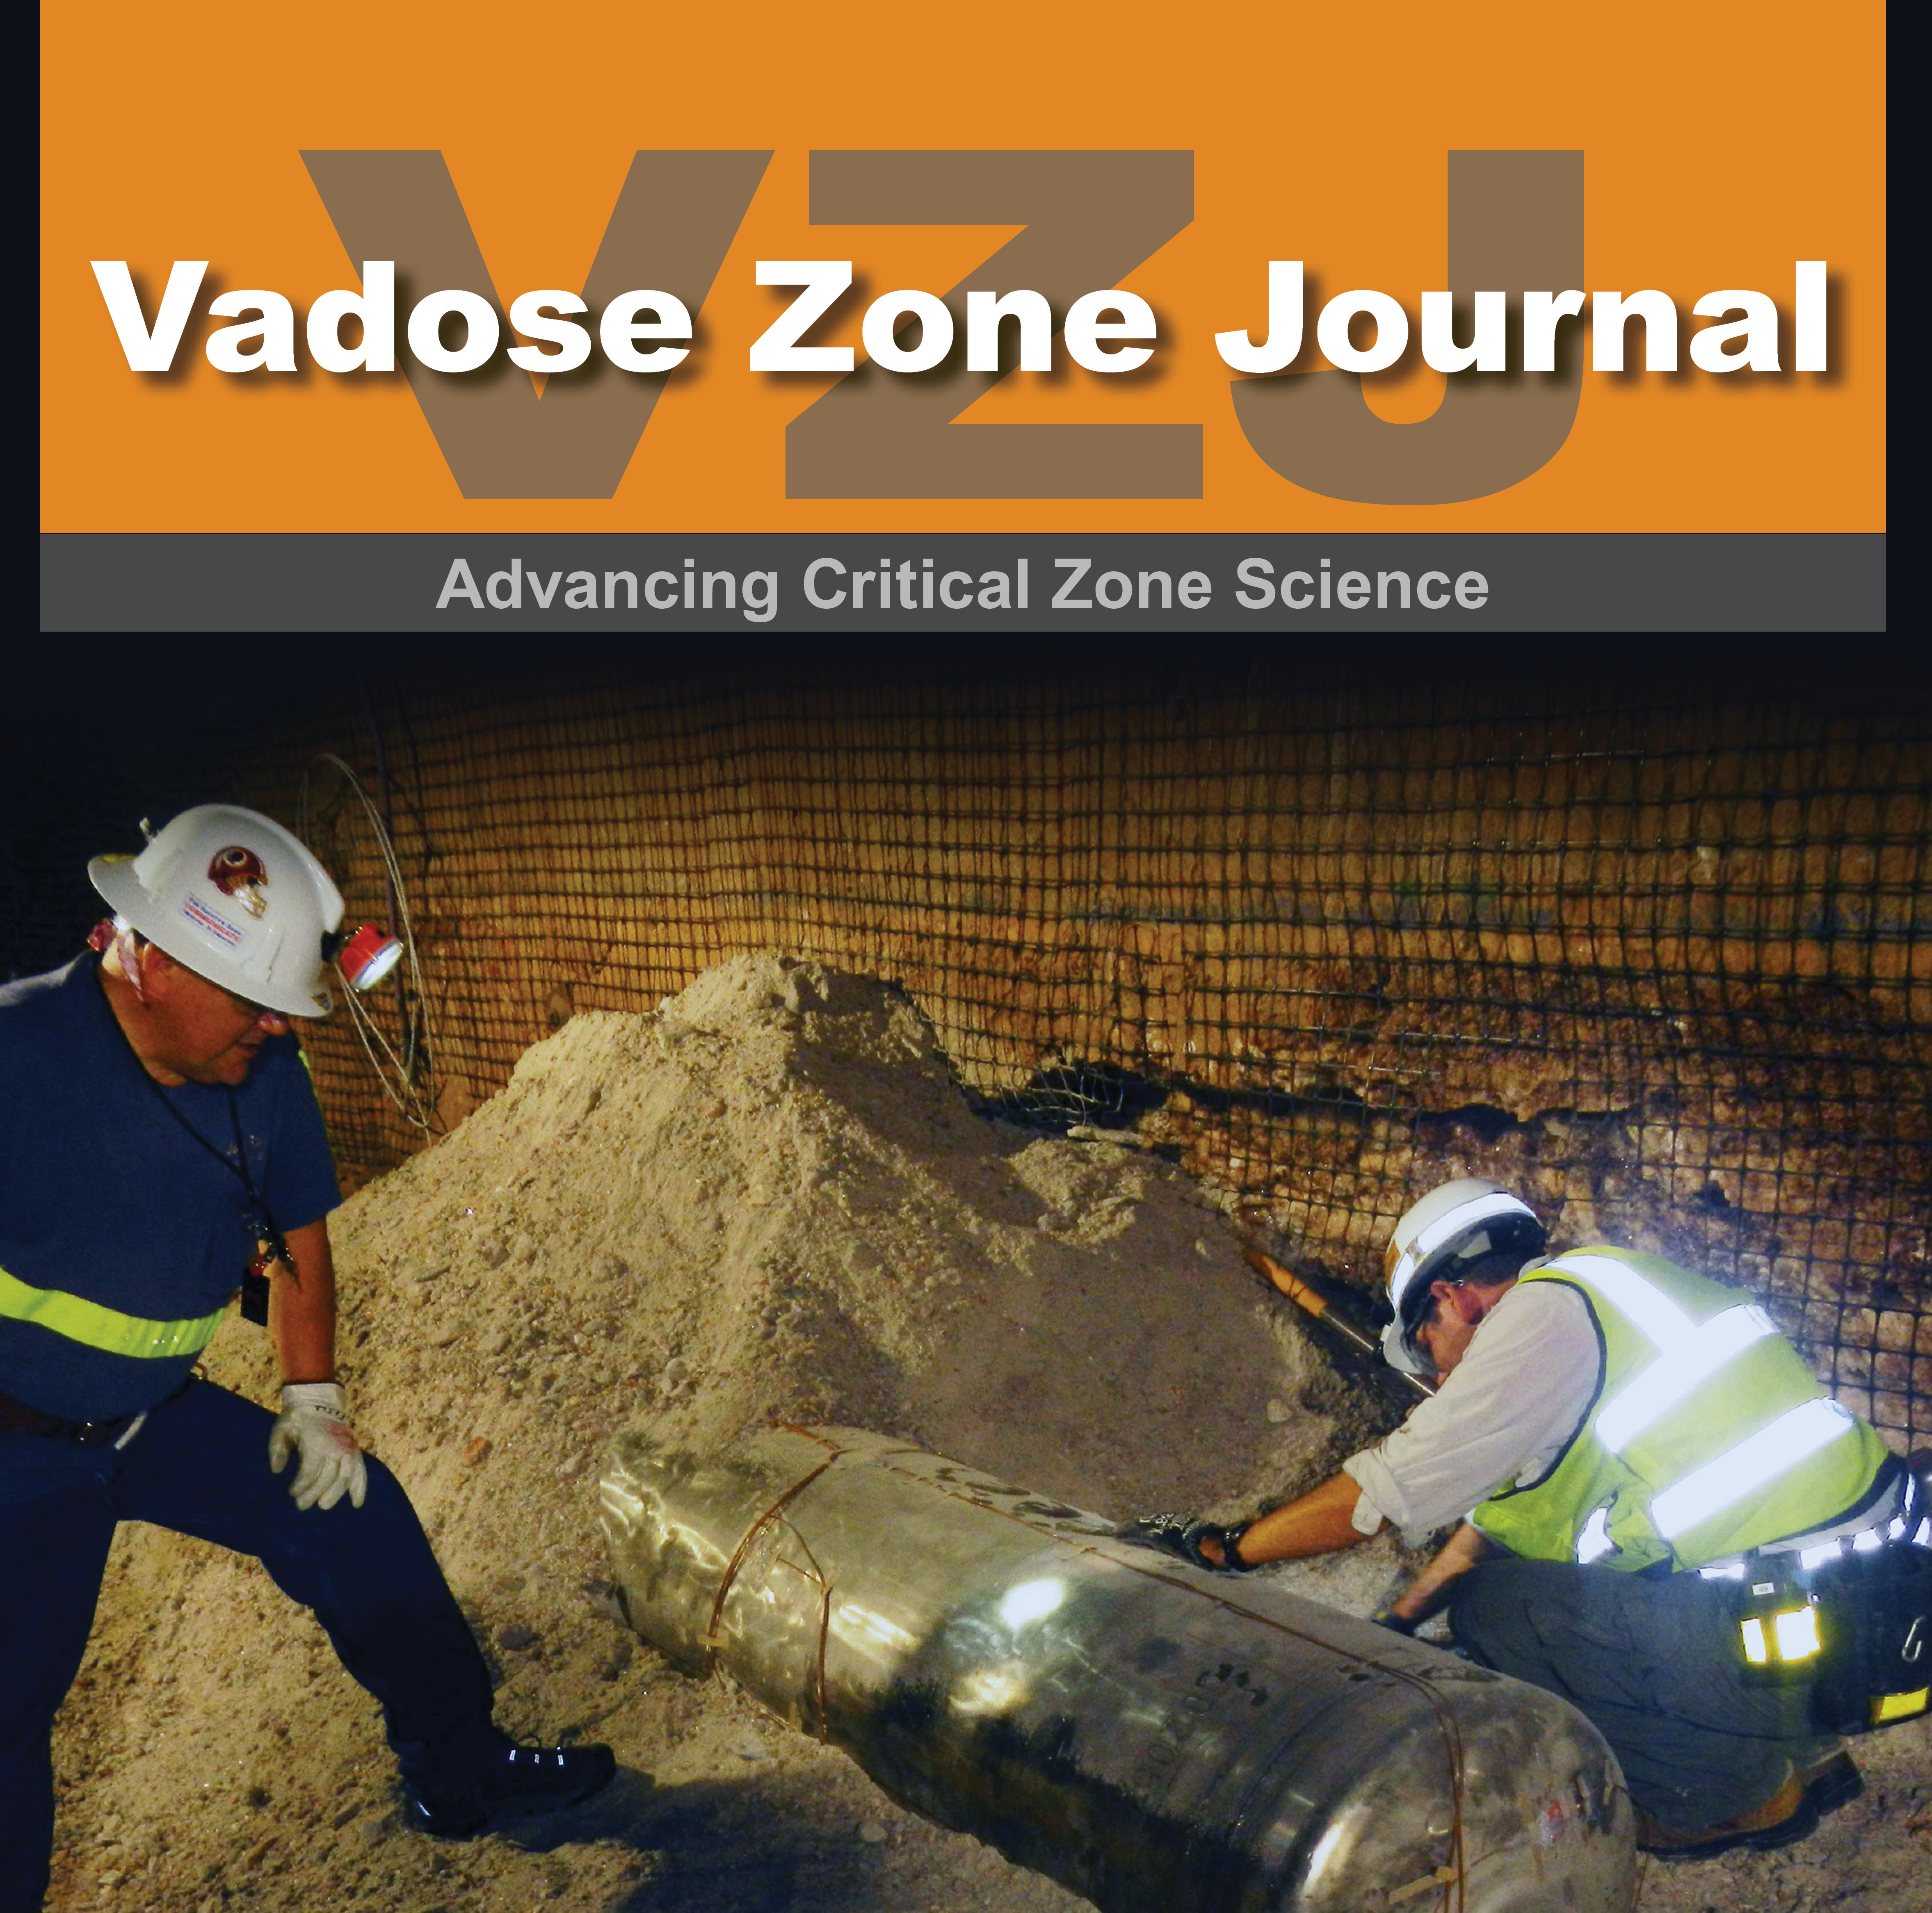 Valdose Zone Journal